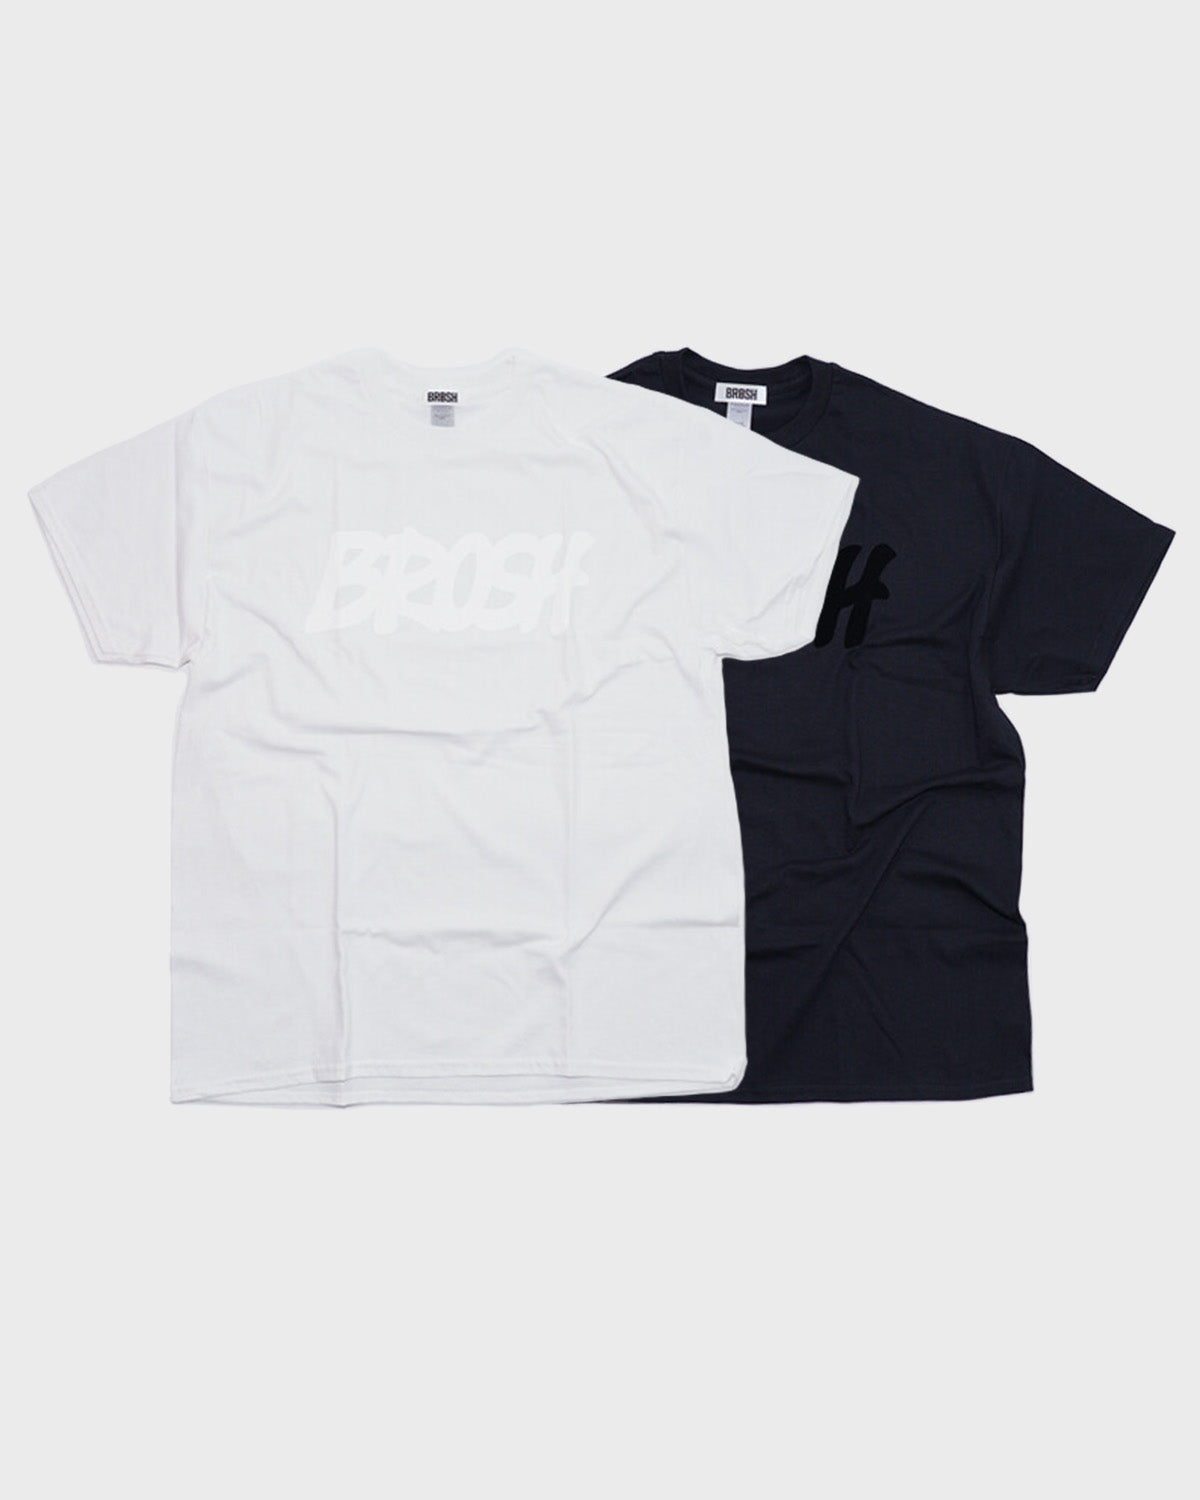 BROSH brush logo T-shirts